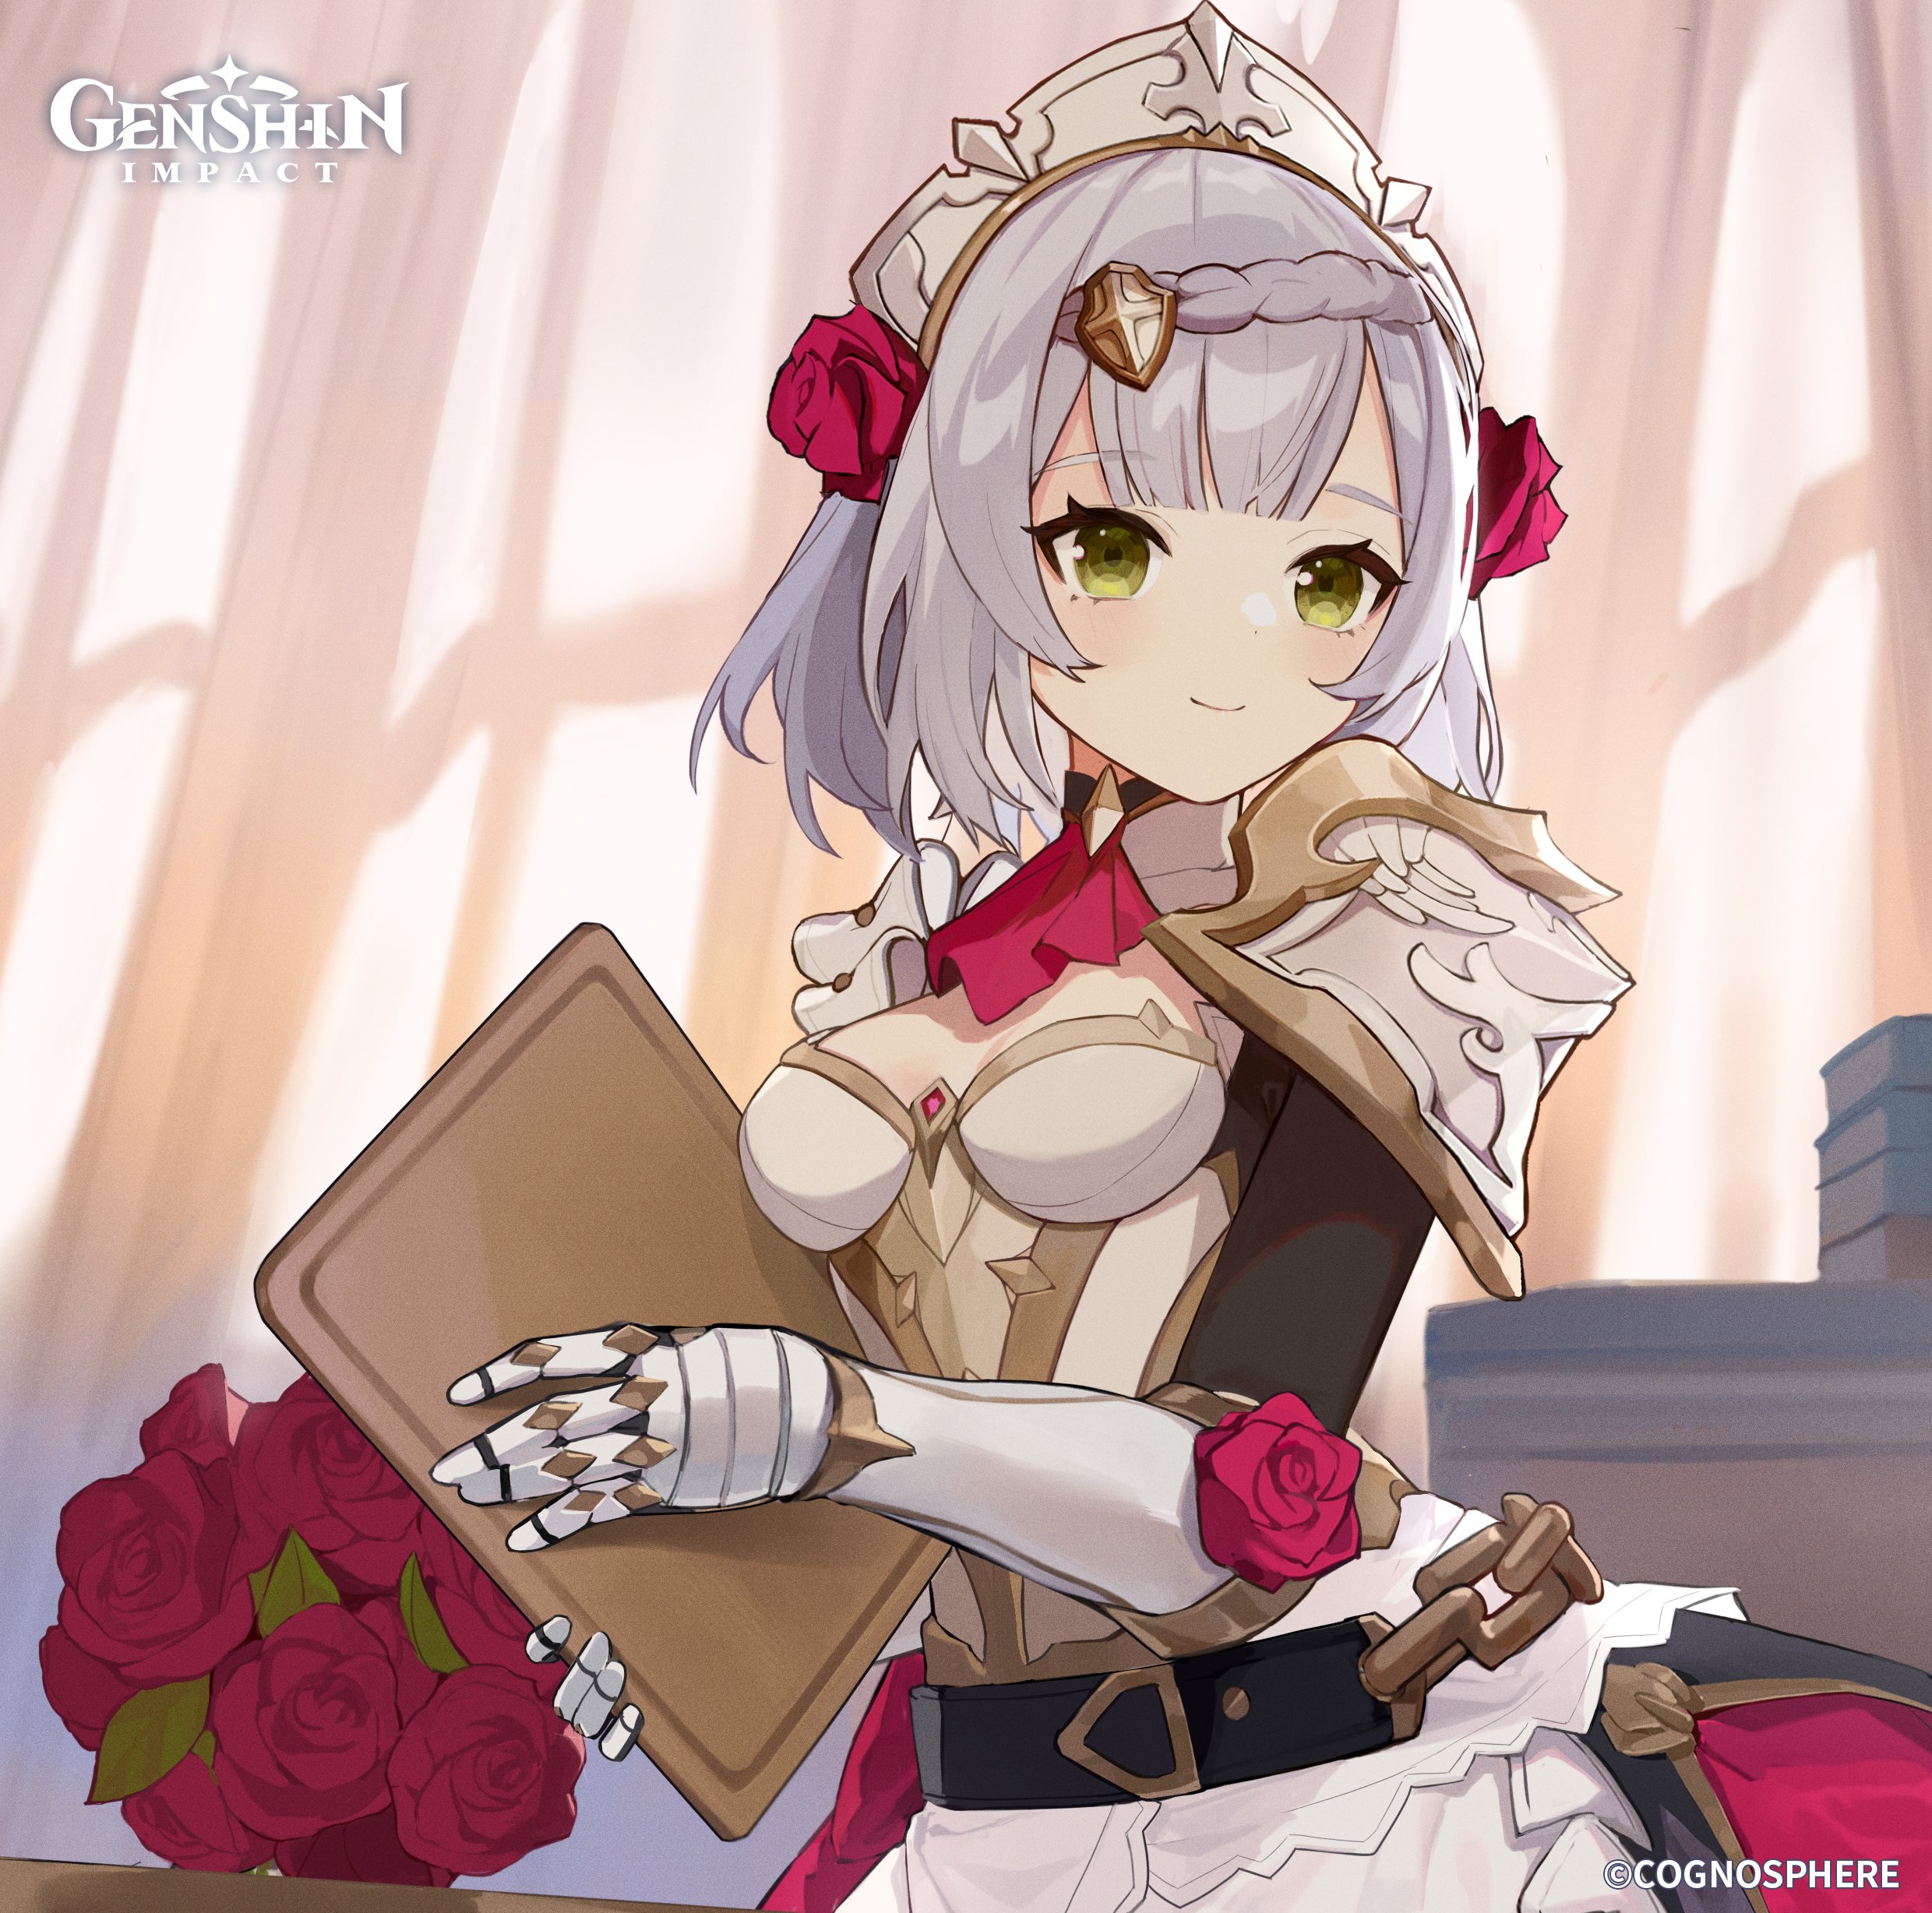 Genshin Impact Version 2.6 Update: Zephyr of the Violet Garden Download Guide, check details